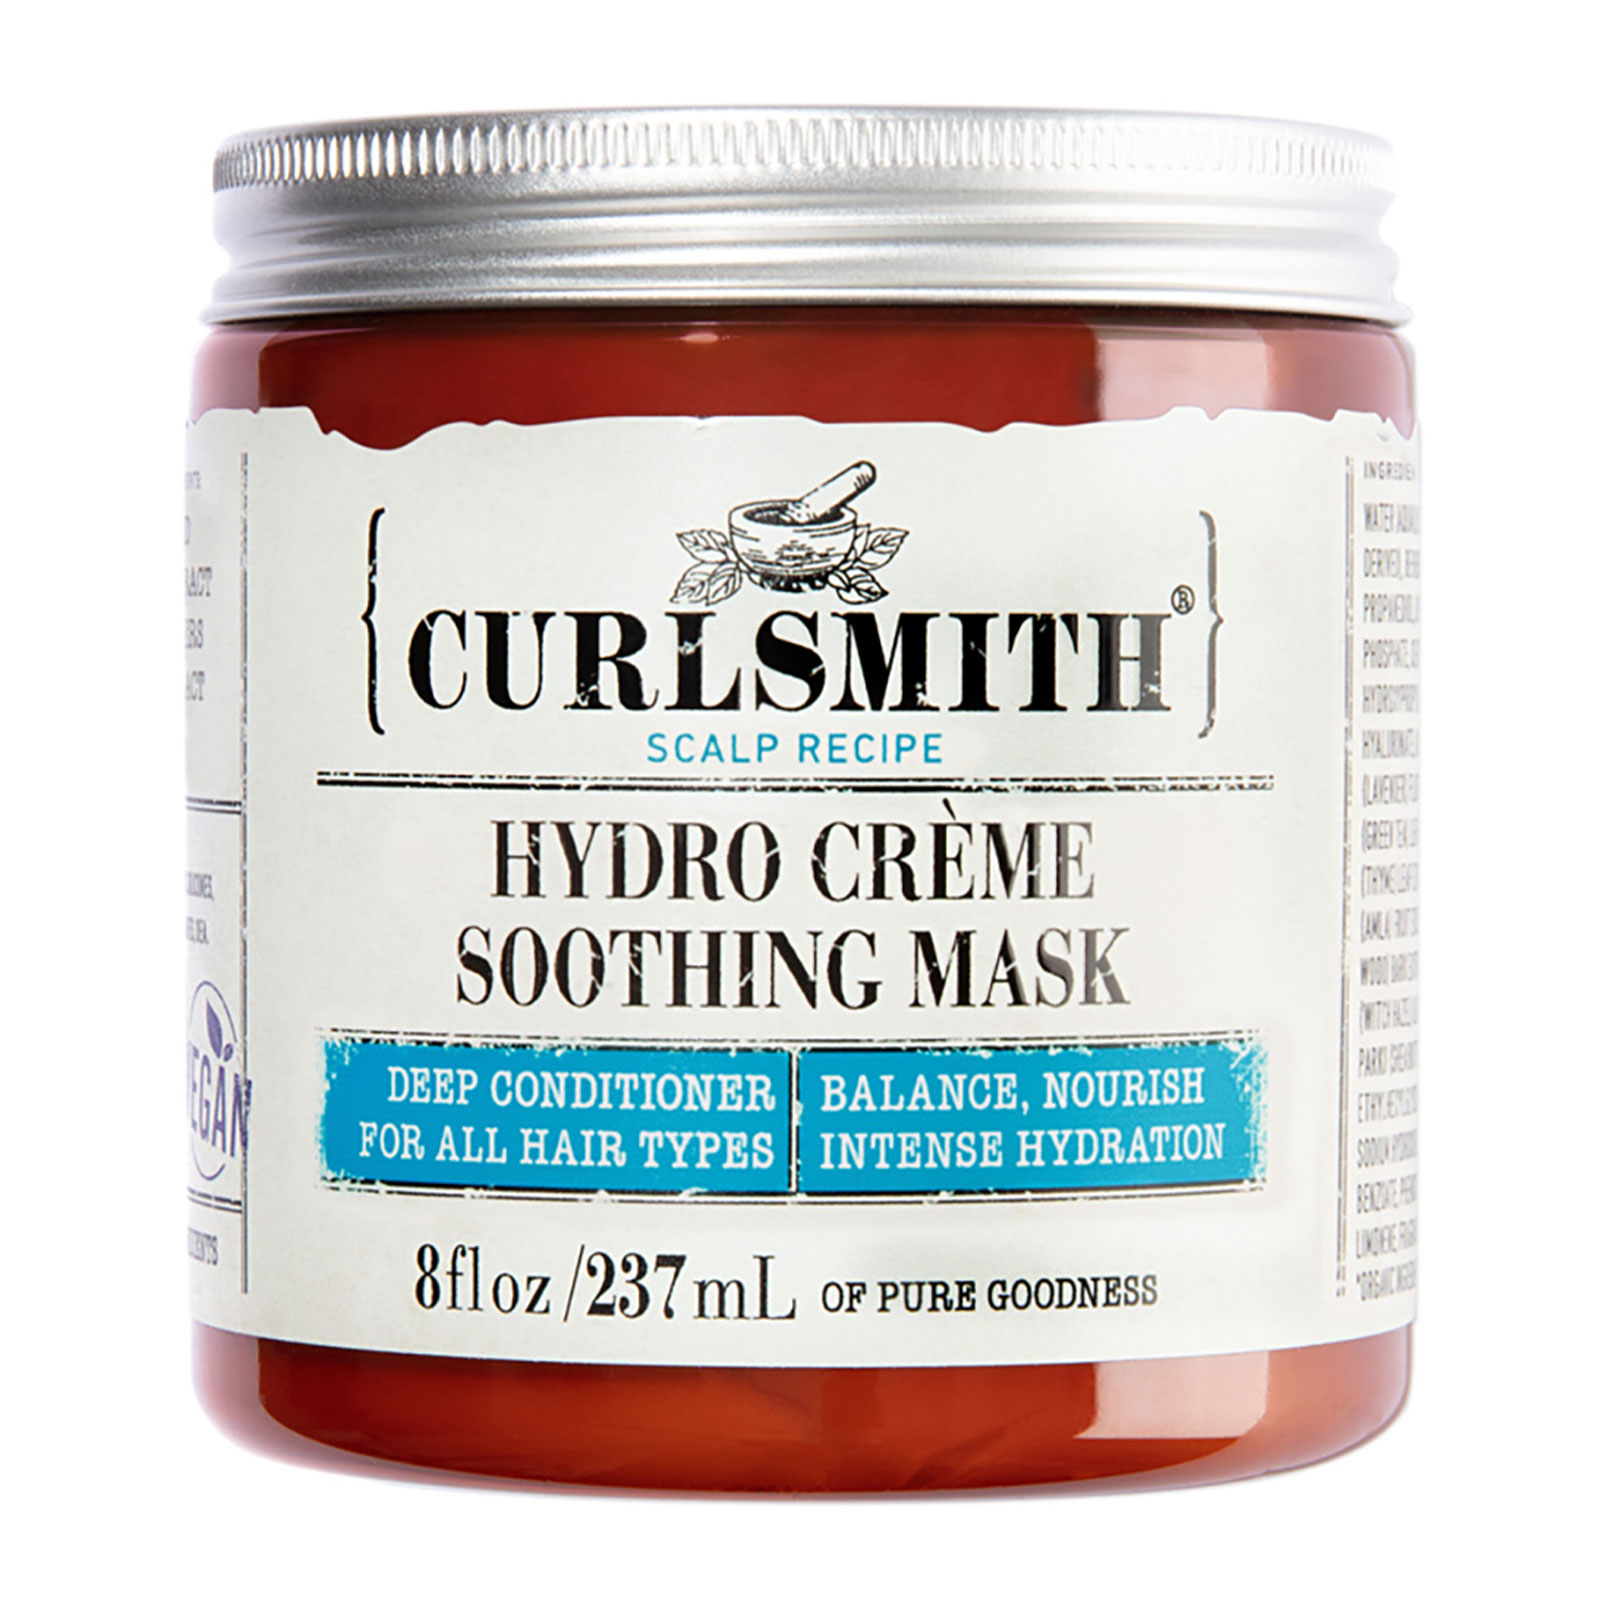 Curlsmith Scalp Hydro Crème Soothing Masque 237ml